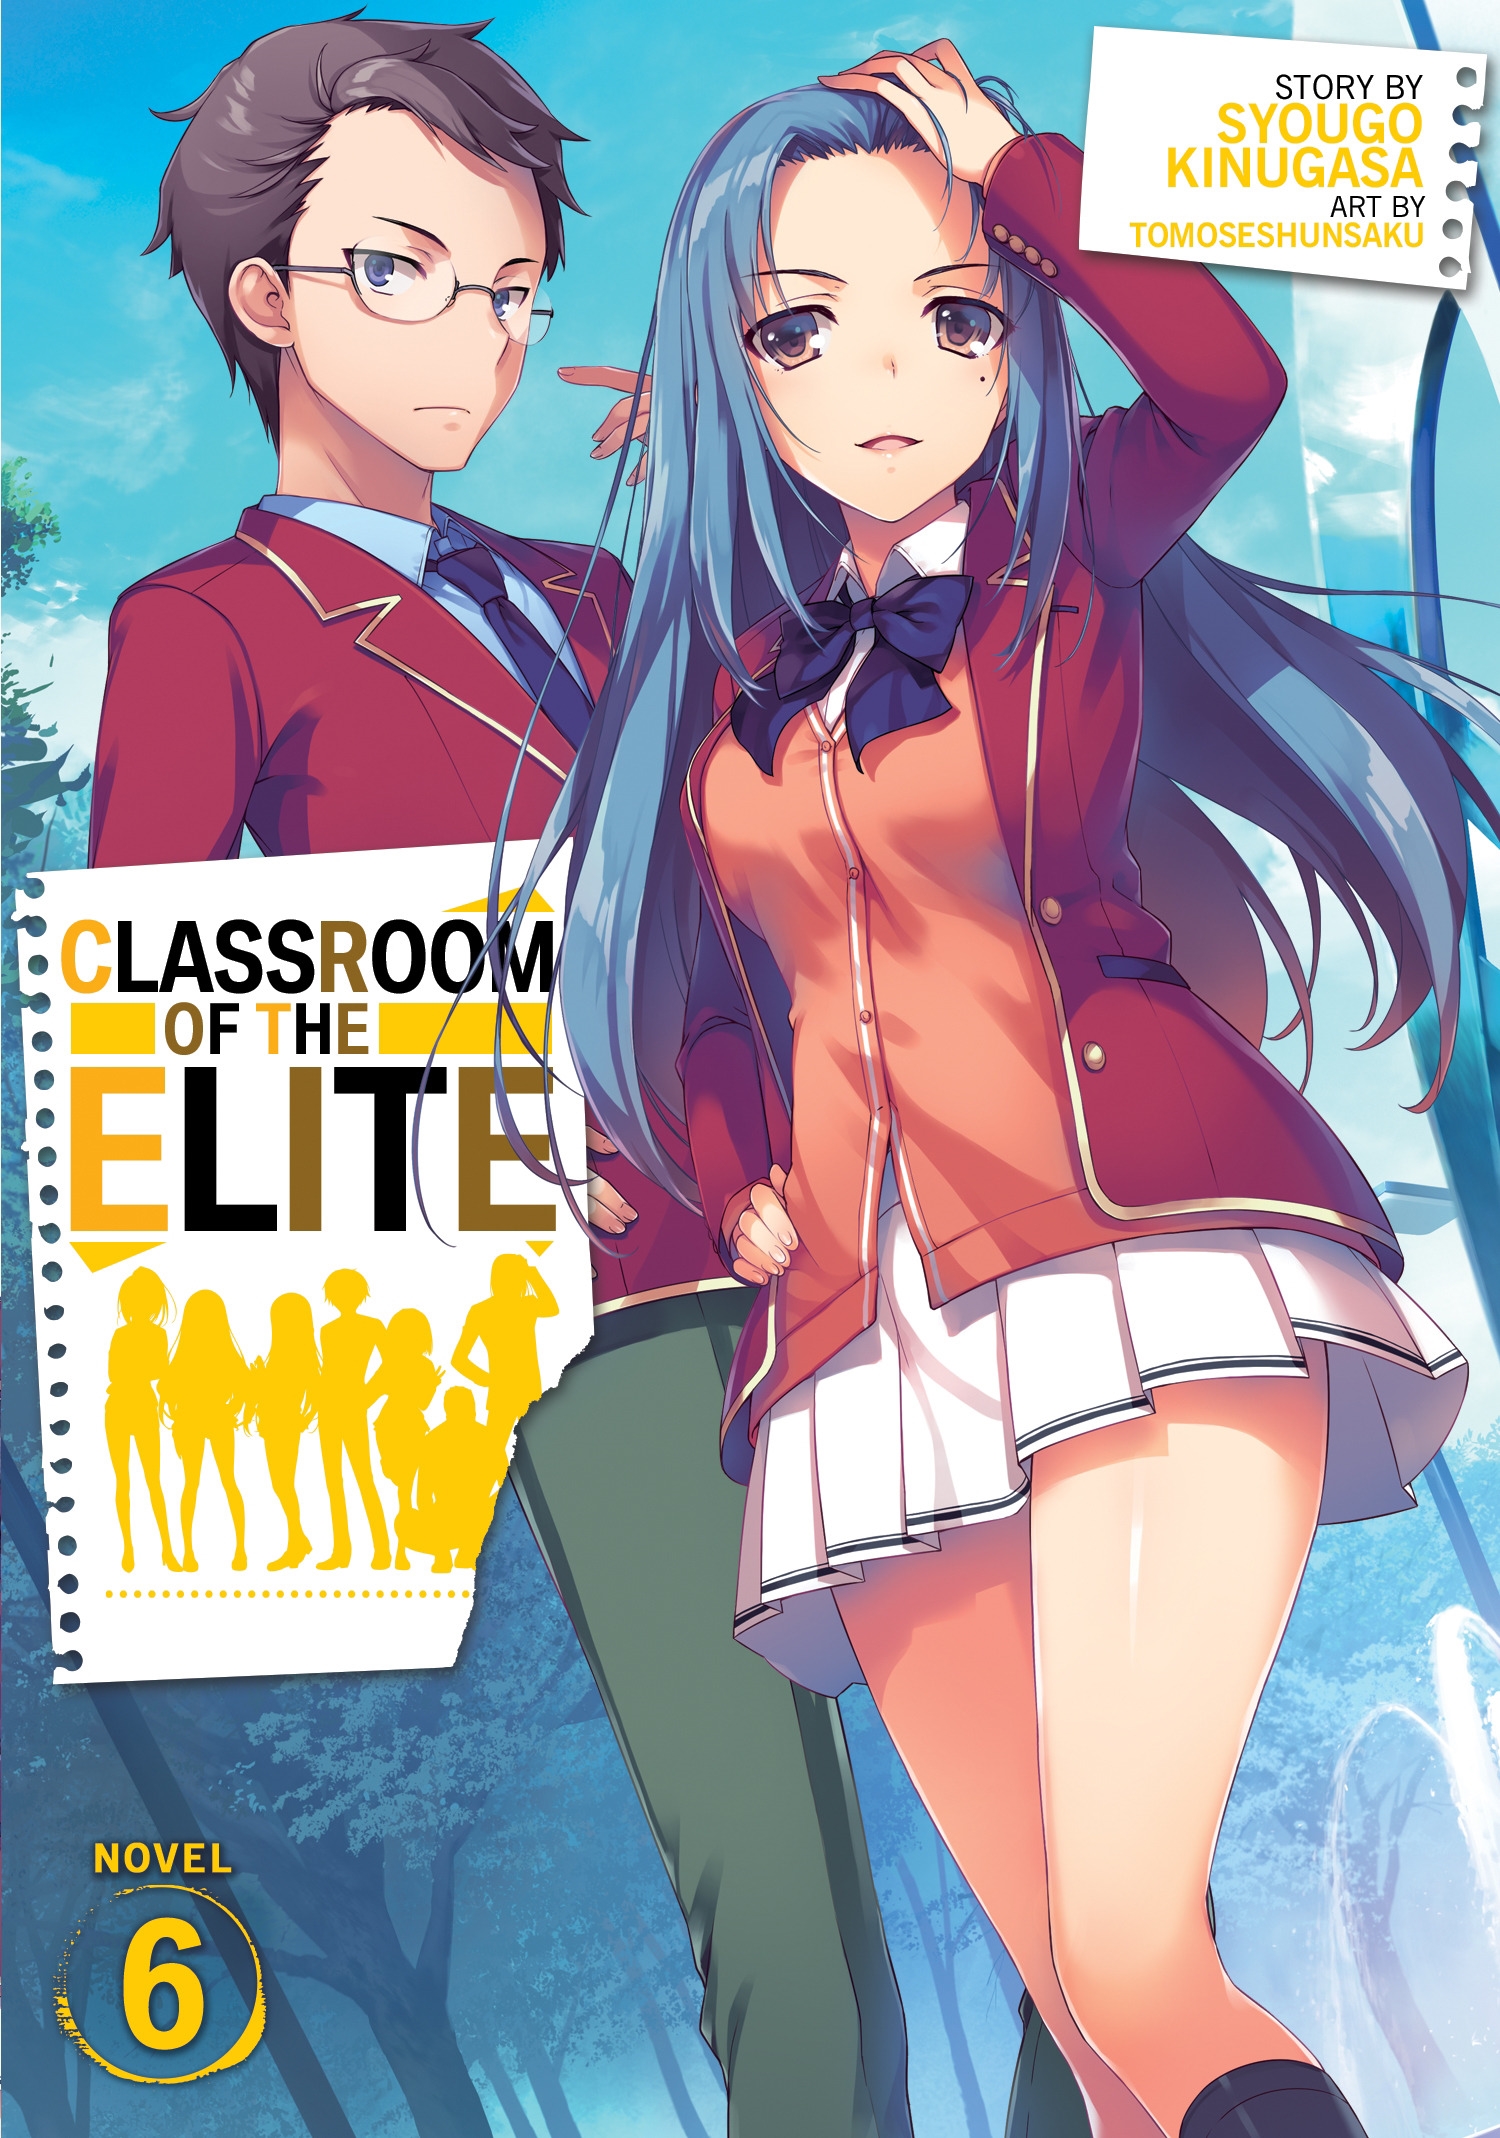 Classroom of the Elite (Manga) Vol. 6 by Syougo Kinugasa - Penguin Books  Australia